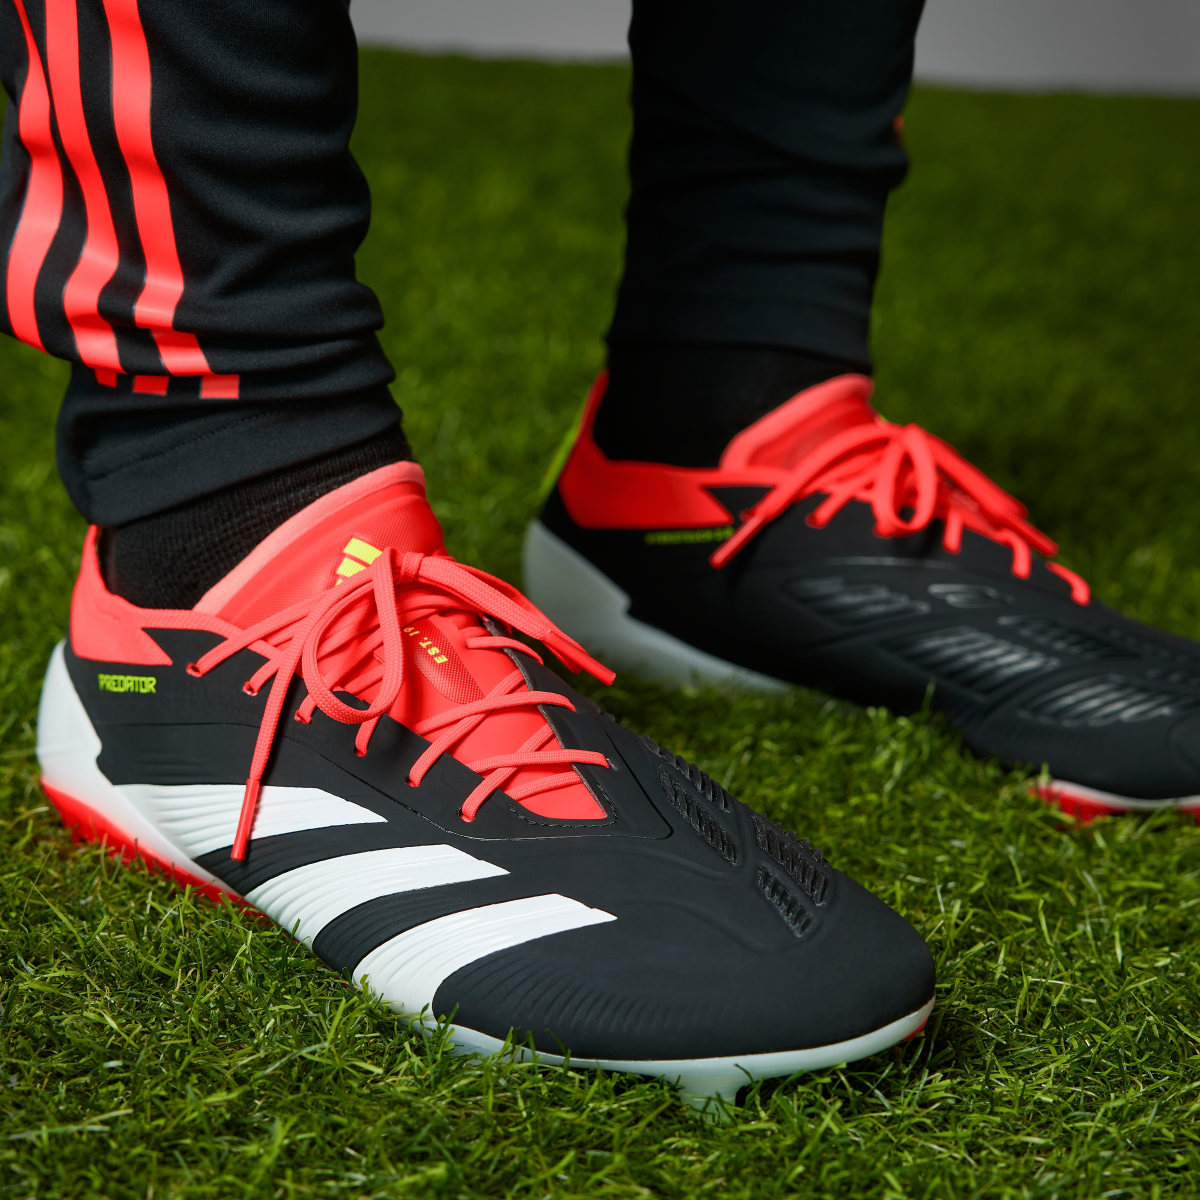 Adidas Predator Elite Firm Ground Football Boots. 9